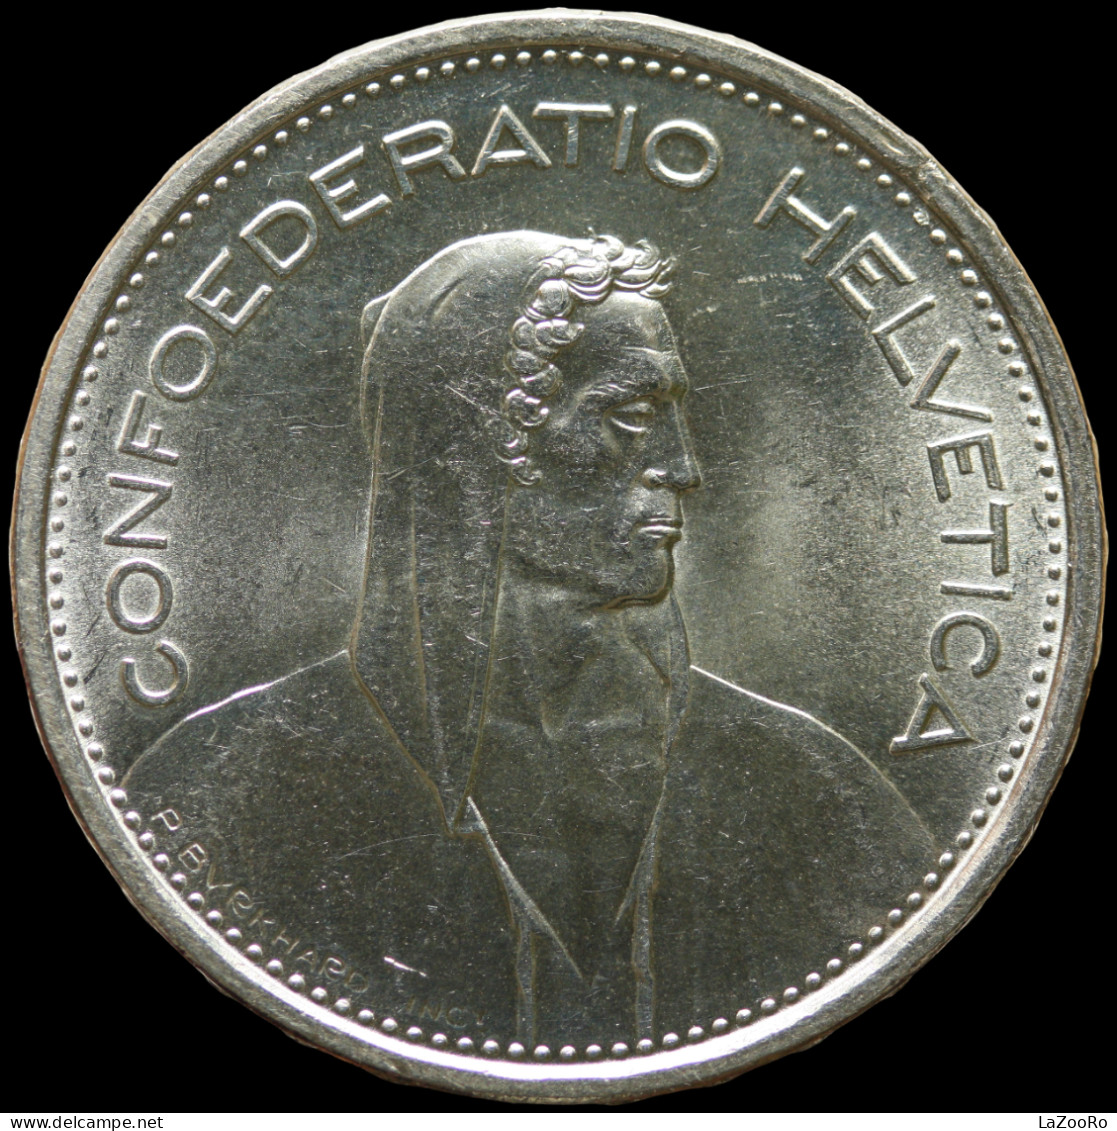 LaZooRo: Switzerland 5 Francs 1966 UNC - Silver - 5 Francs